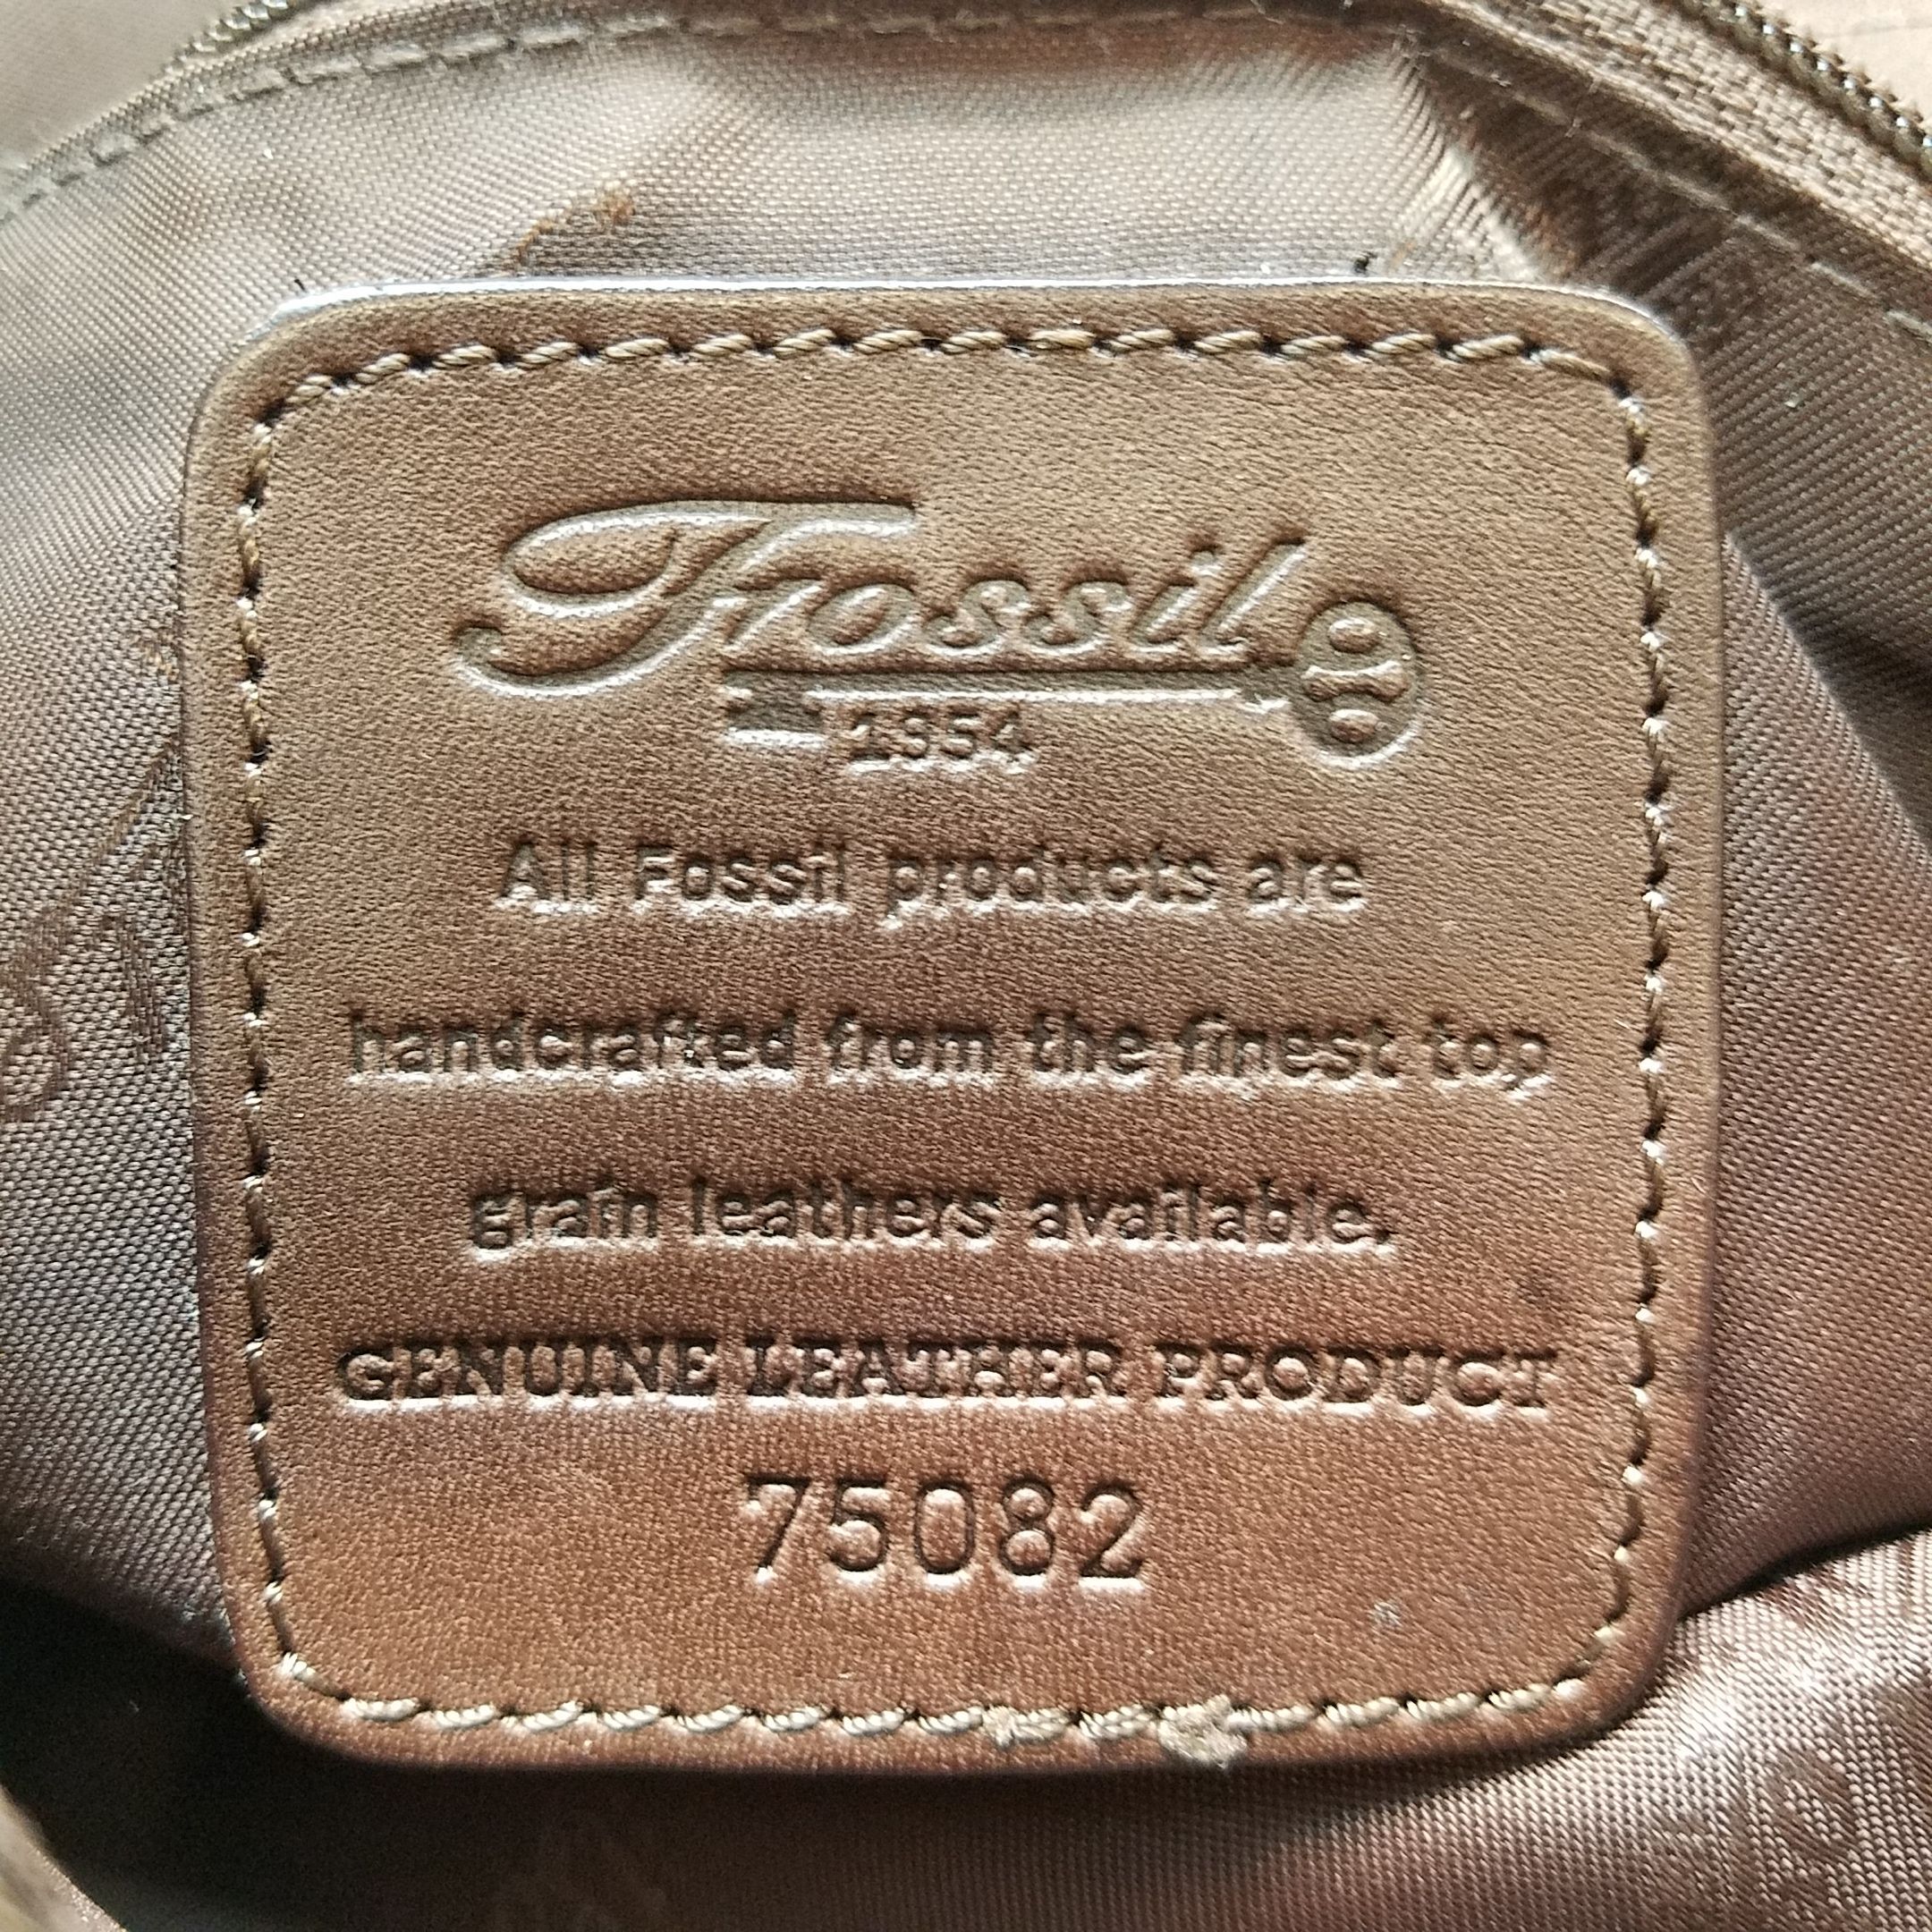 Fossil | Bags | Fossil Black Leather Mini Organizer Purse Crossbody Handbag  | Poshmark